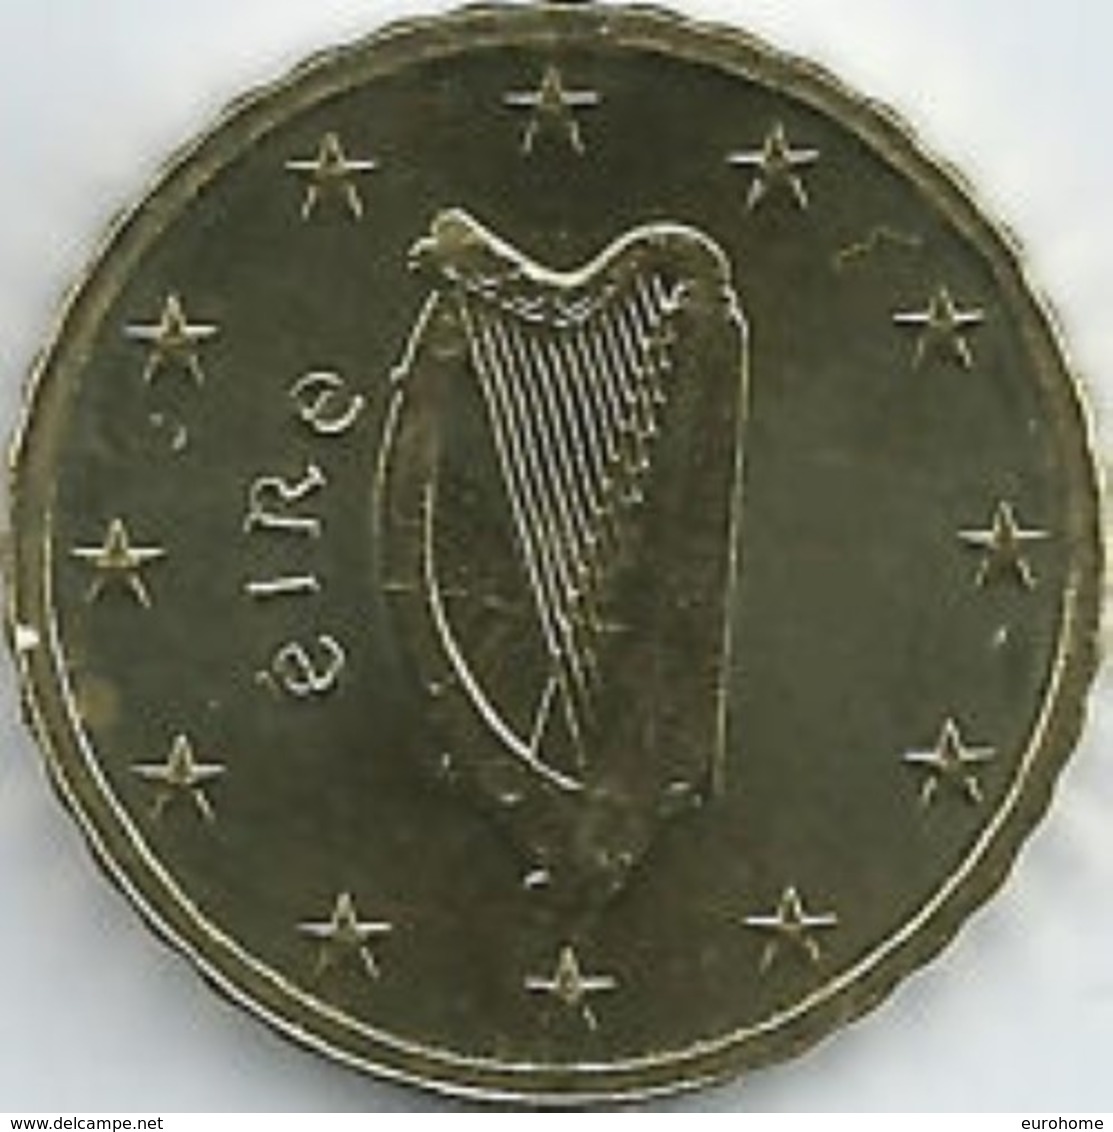 Ierland 2019  10 Cent  UNC Uit De BU  UNC Du Coffret  ZEER ZELDZAAM - EXTREME RARE  8.000 Ex !!! - Irlande